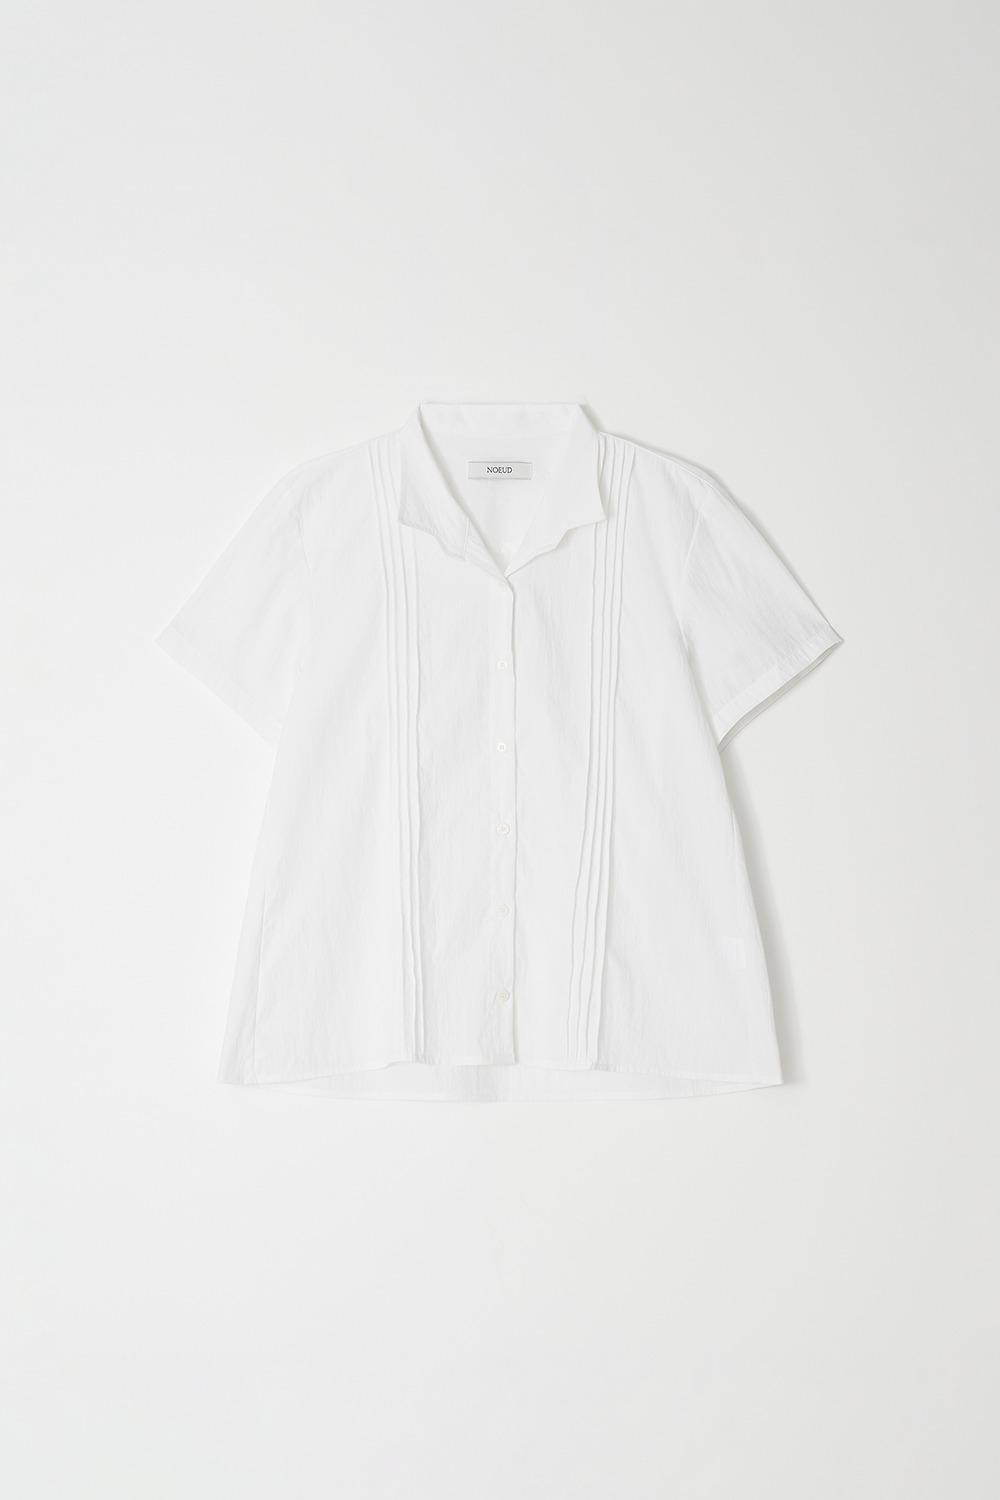 Pintuck short-sleeved shirt (Ivory)